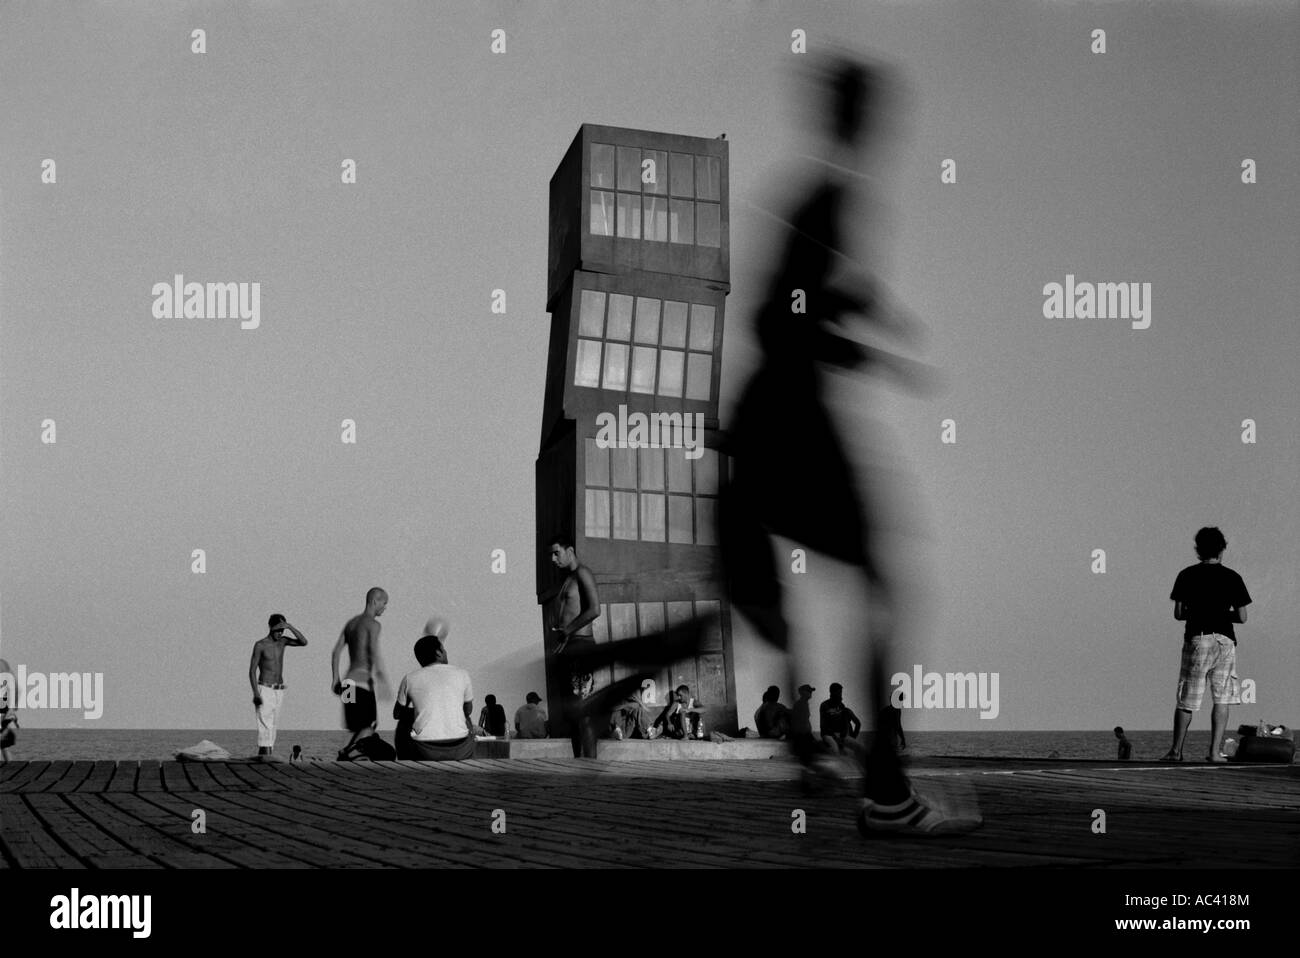 Barcelona. Man running Stock Photo